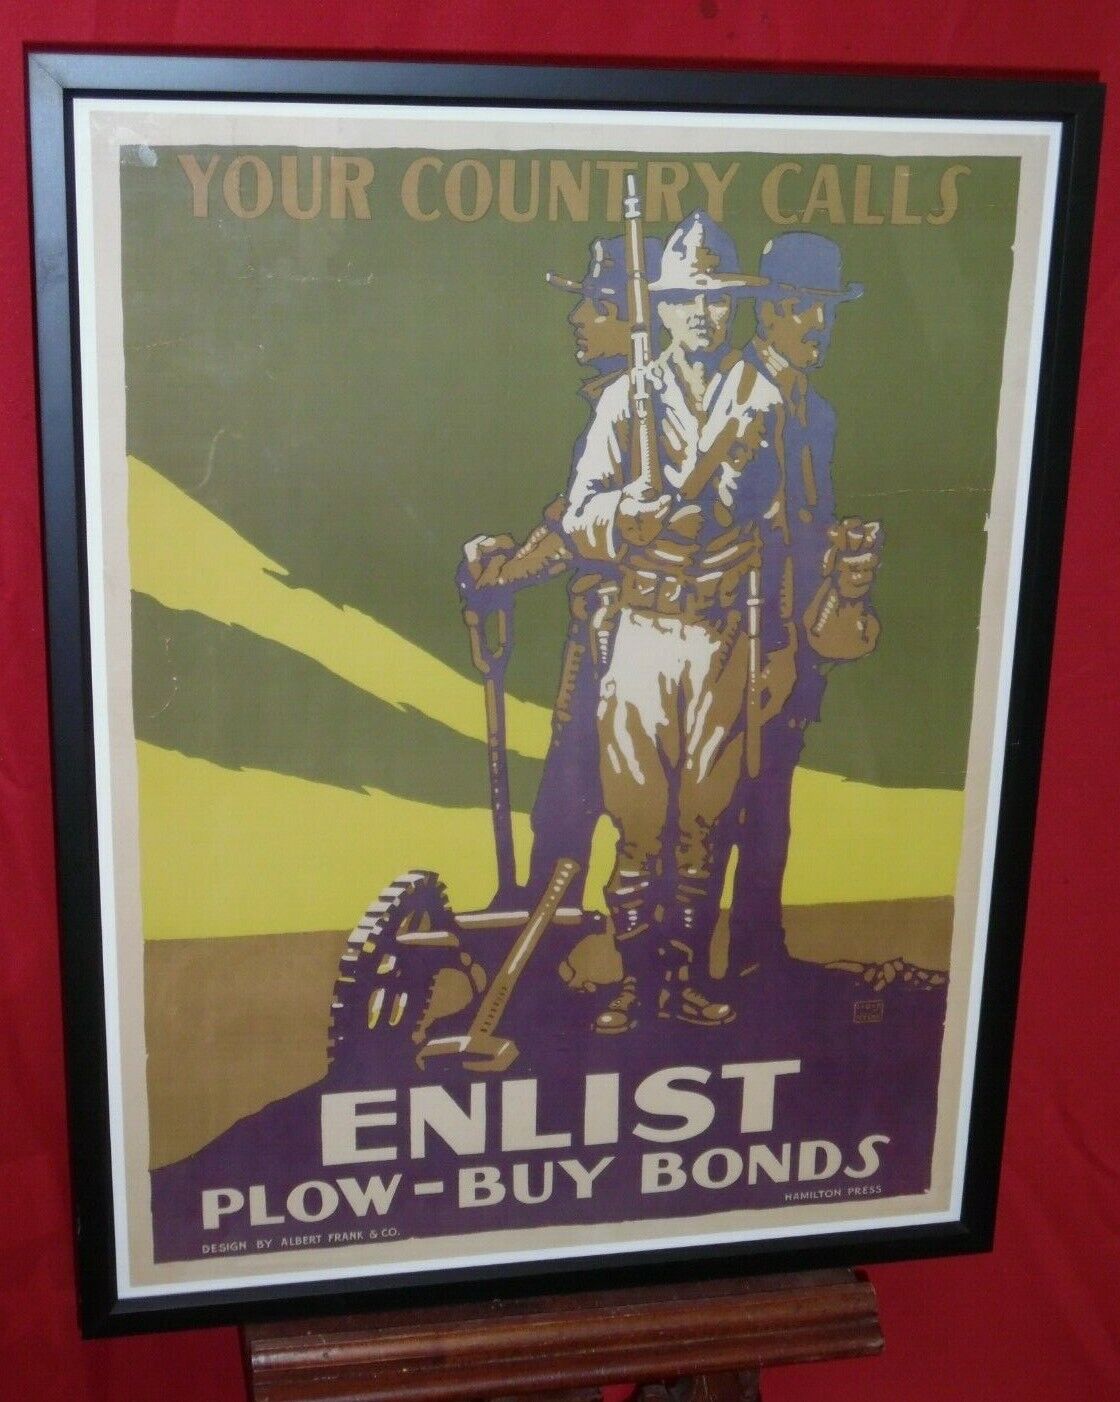 WWI Poster - Enlist Plow Buy Bonds Hamilton Press Lloyd Myers Albert Frank